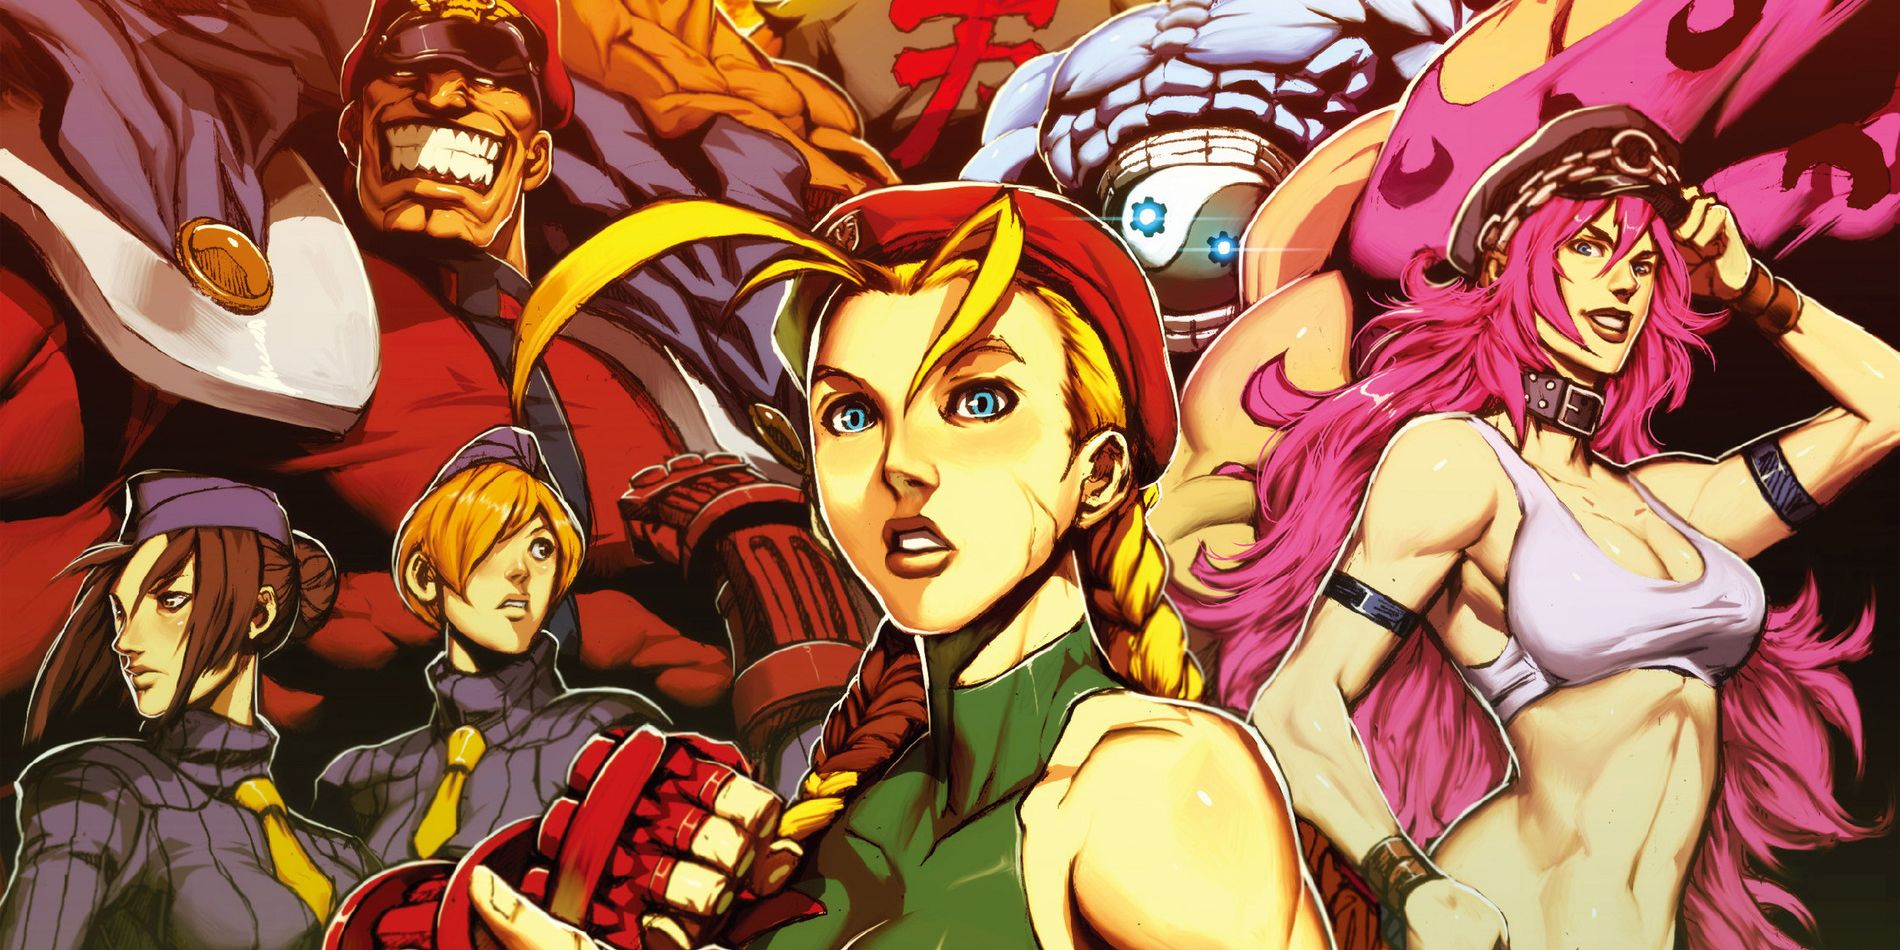 Super Street Fighter II Cover